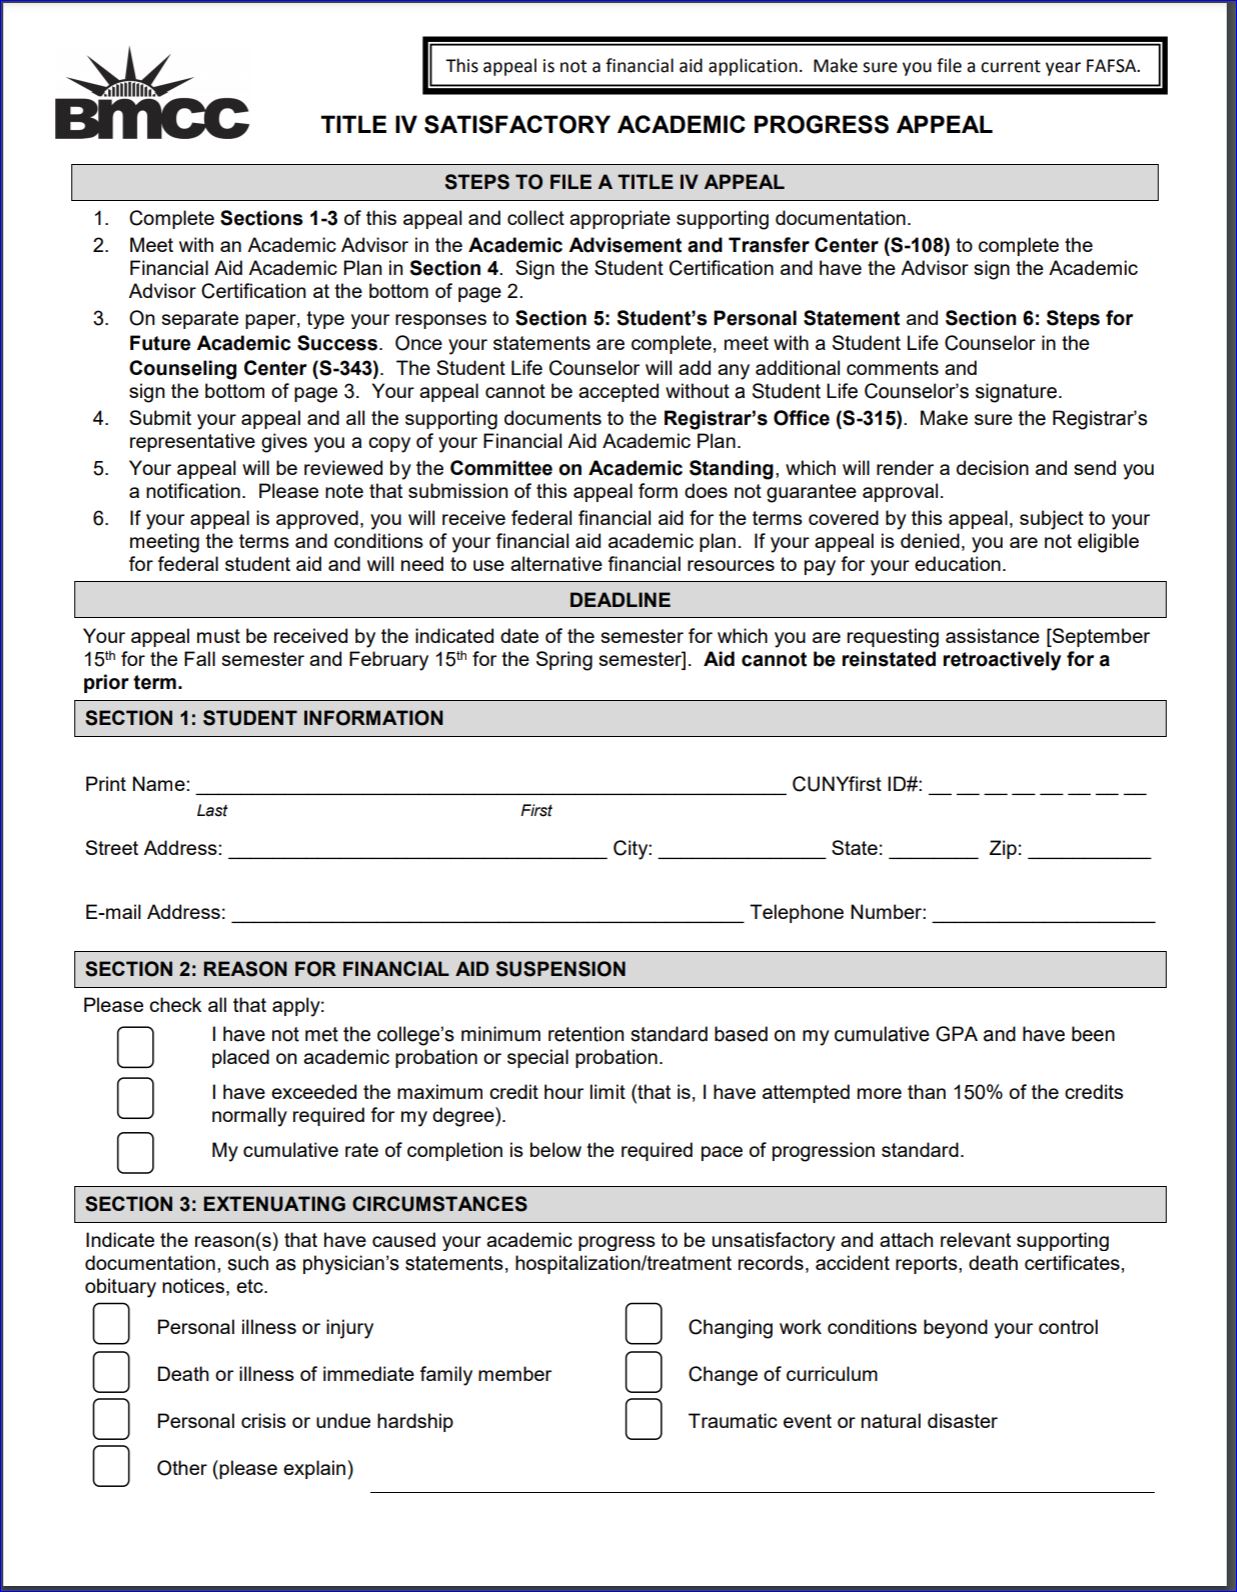 SAP Appeal Form